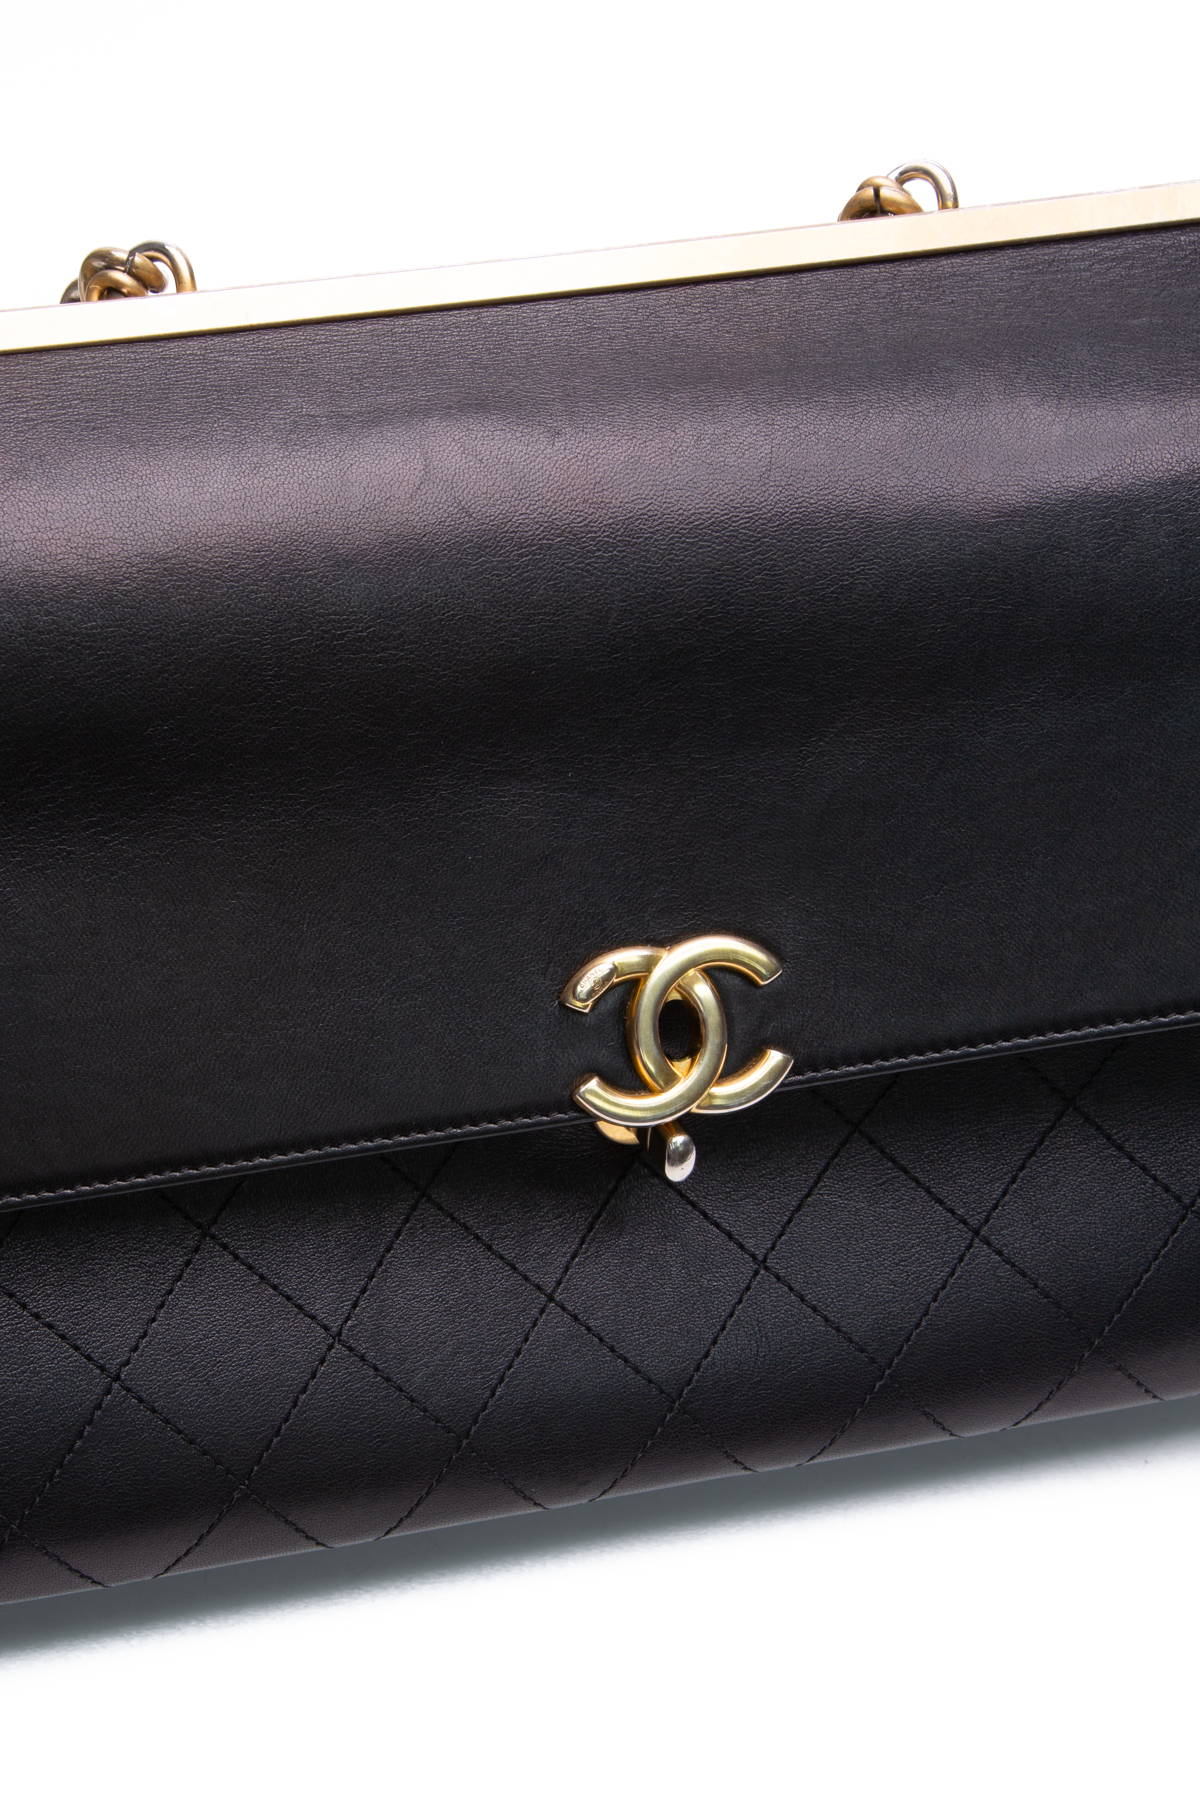 Chanel Small Coco Luxe Flap Bag - Shoulder Bags, Handbags